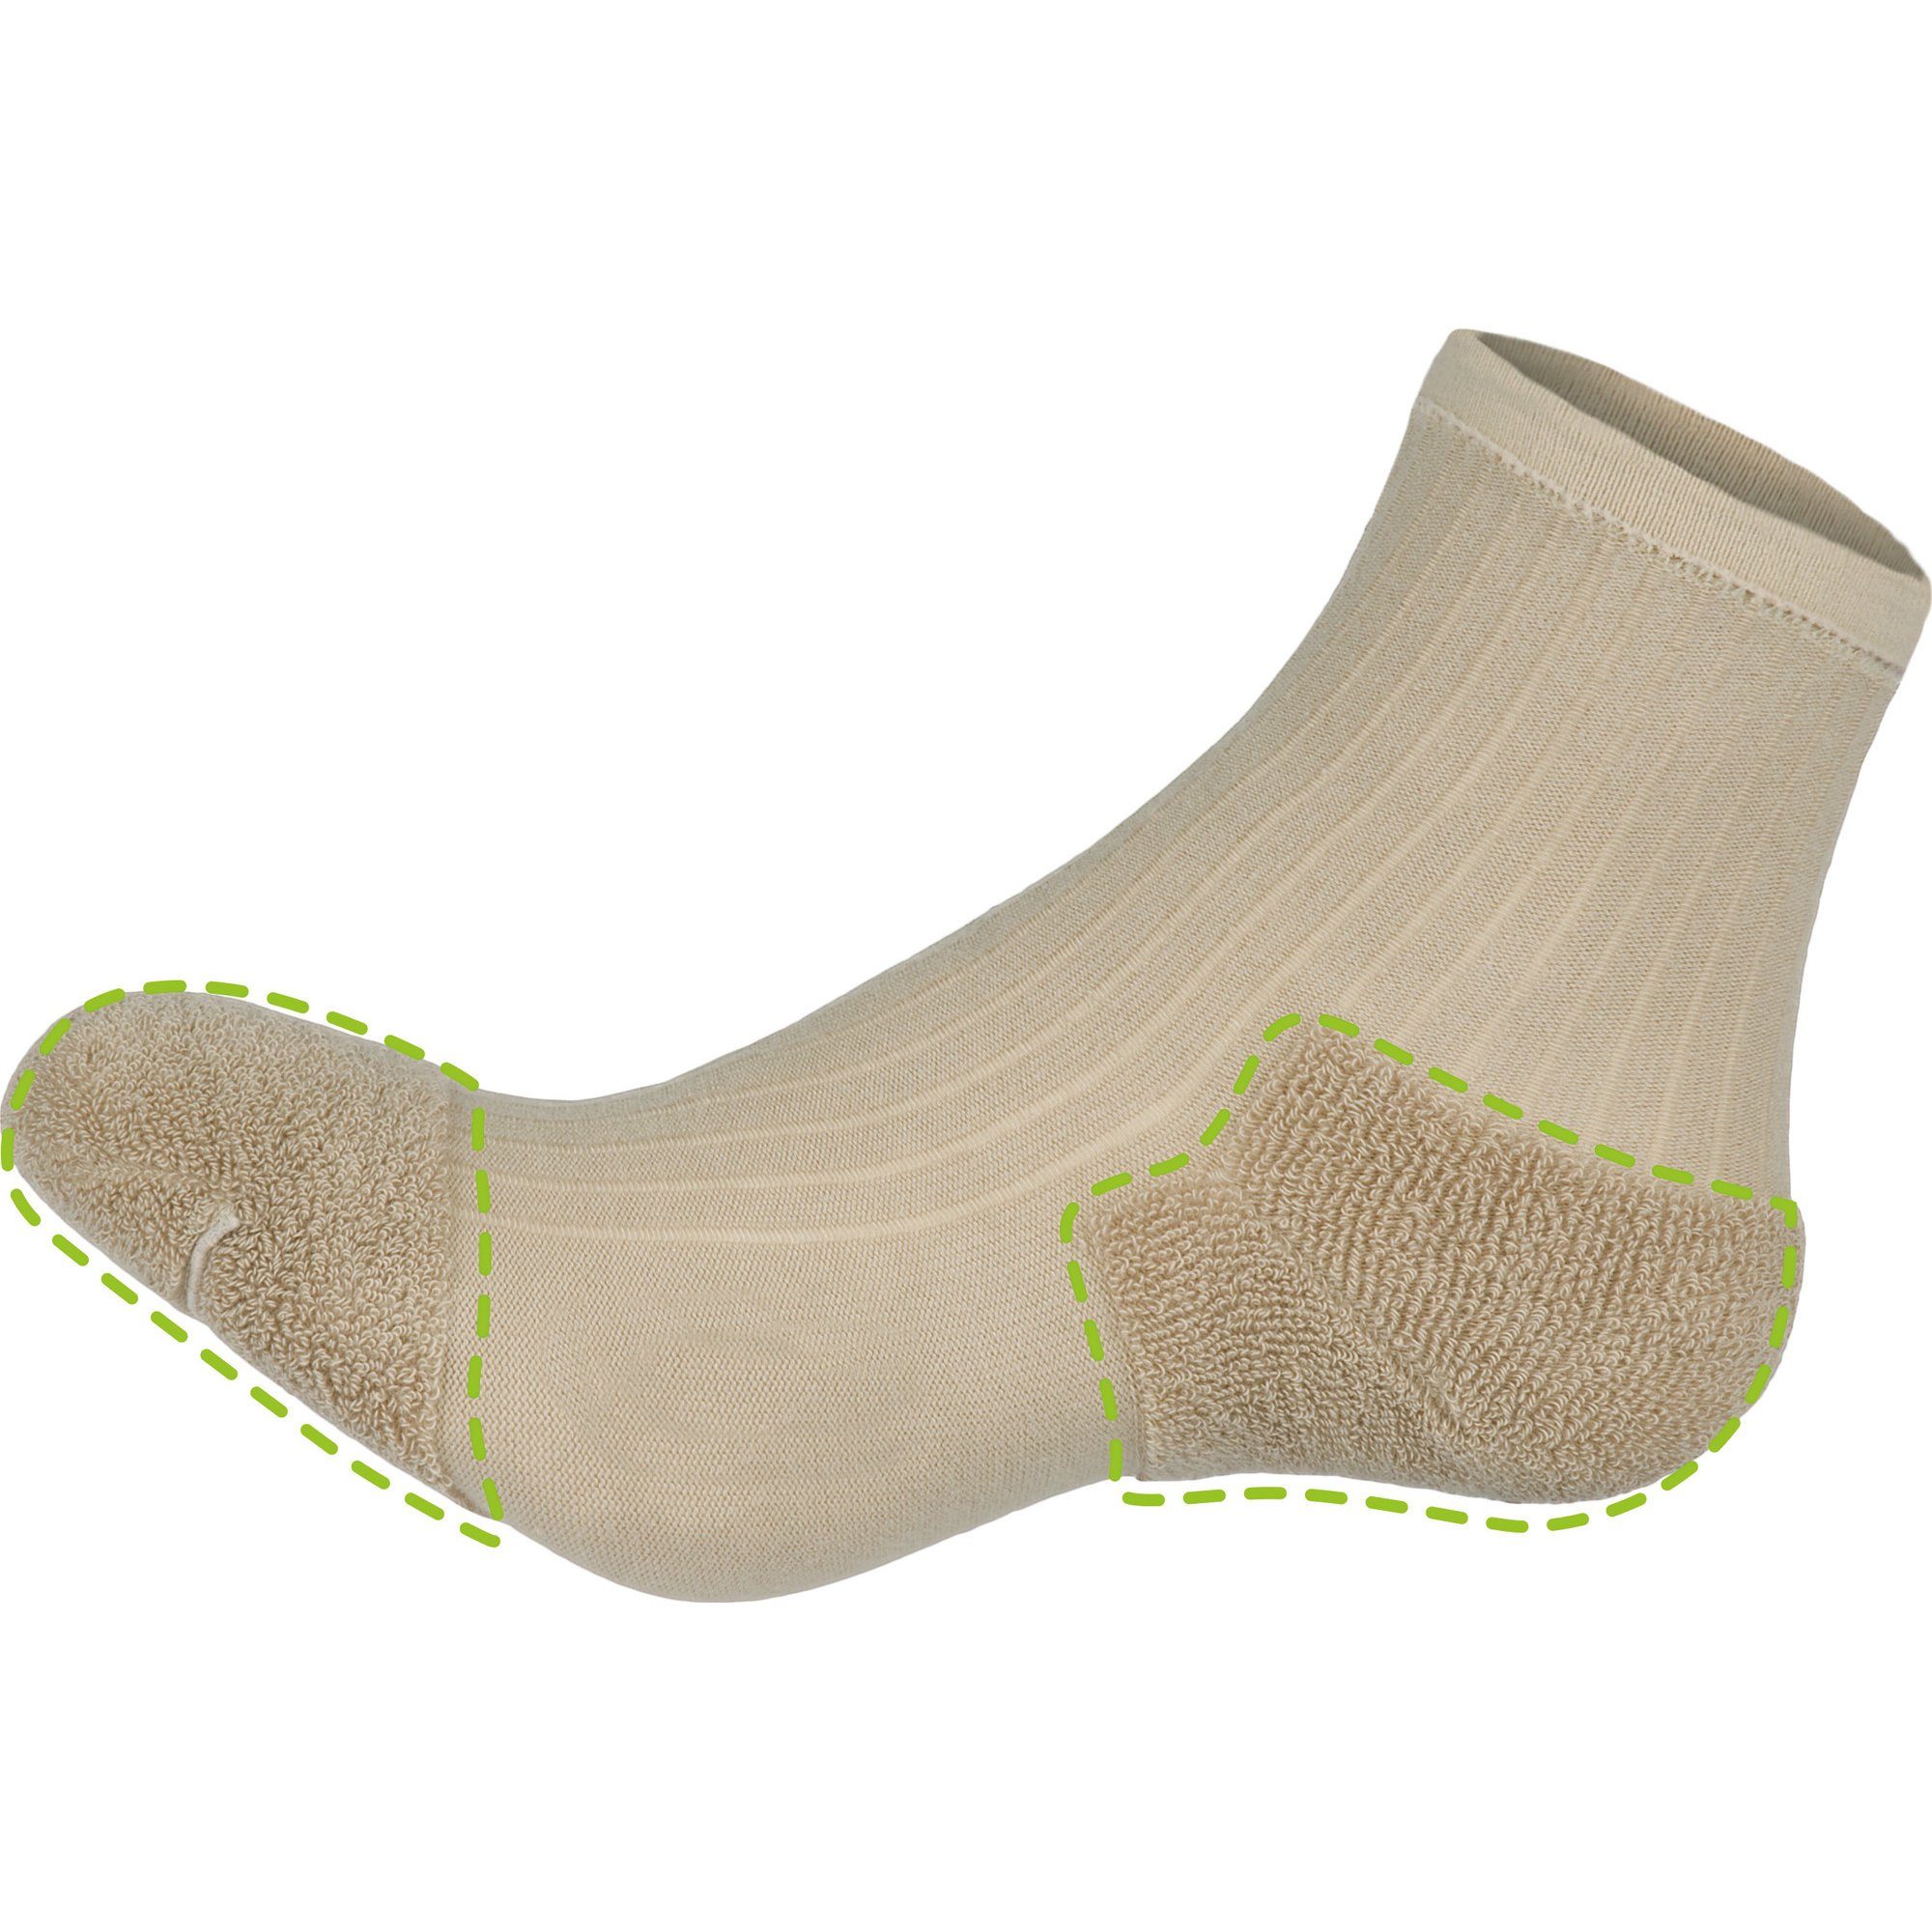 schwarz Paar Fußgut 1 Socken Unisex-Sensitiv-Socken Uni